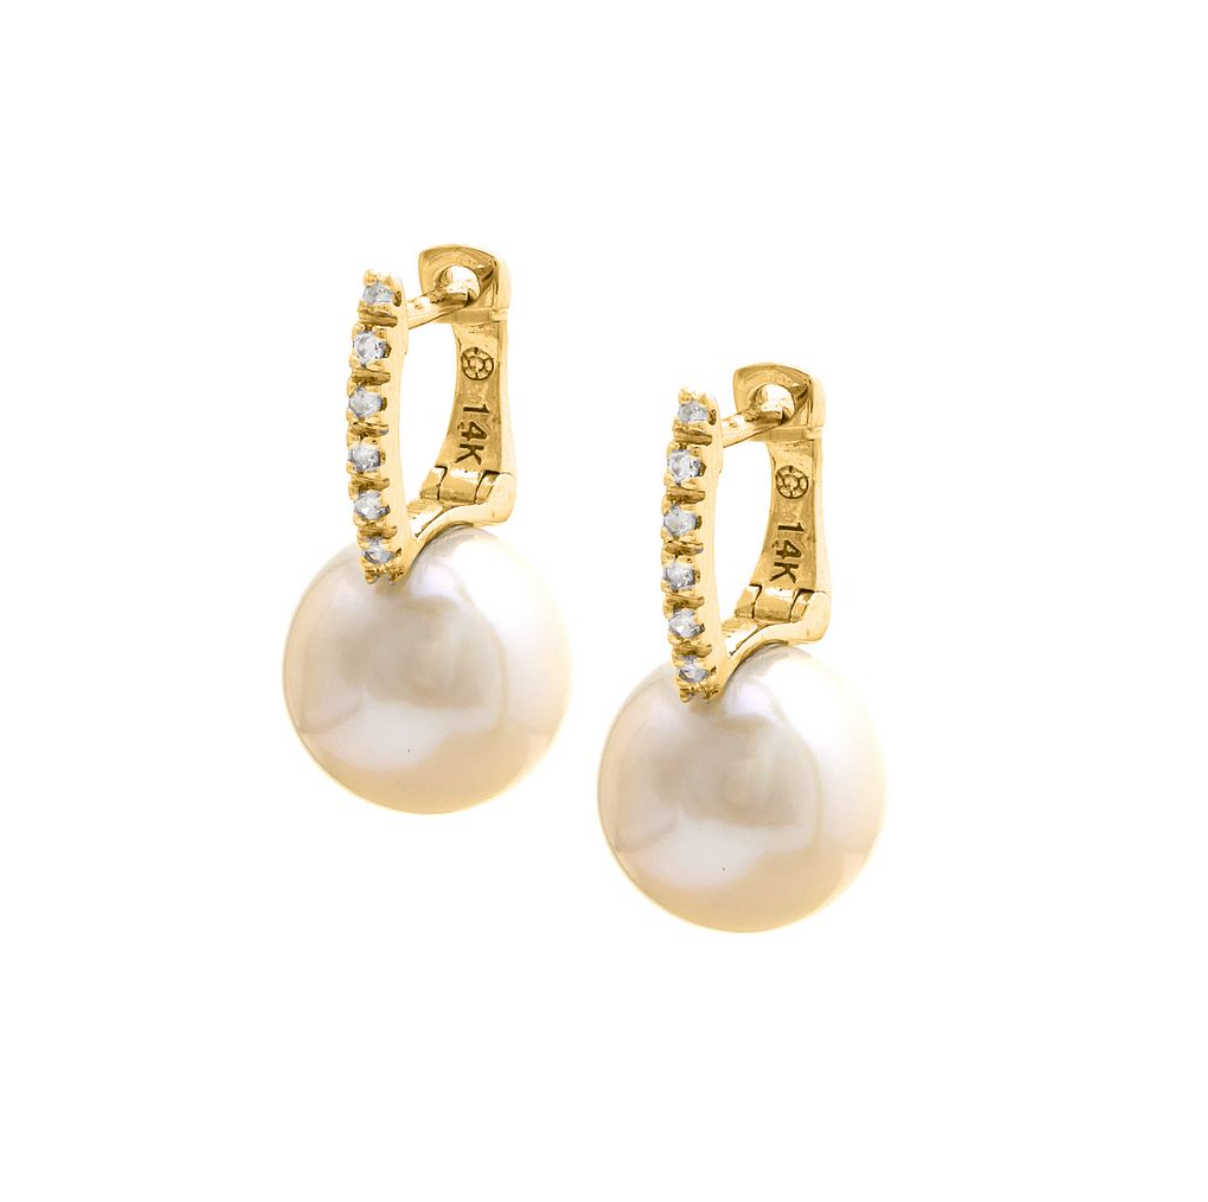 Earring With Pearl, Diamonds. Yellow Gold - 14k